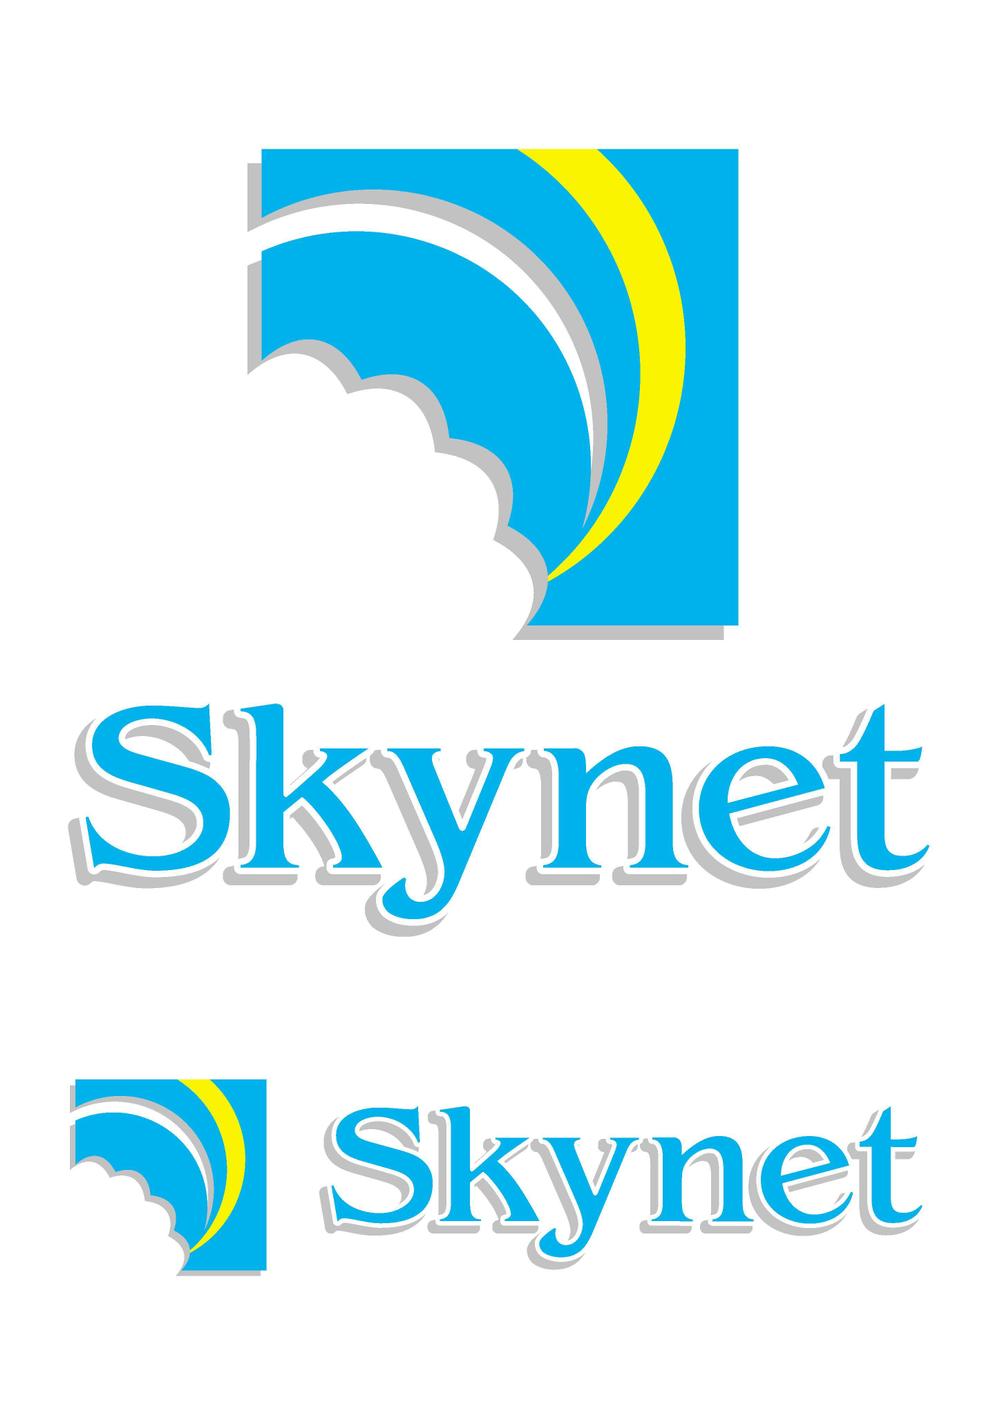 Skynet_06提案A.jpg